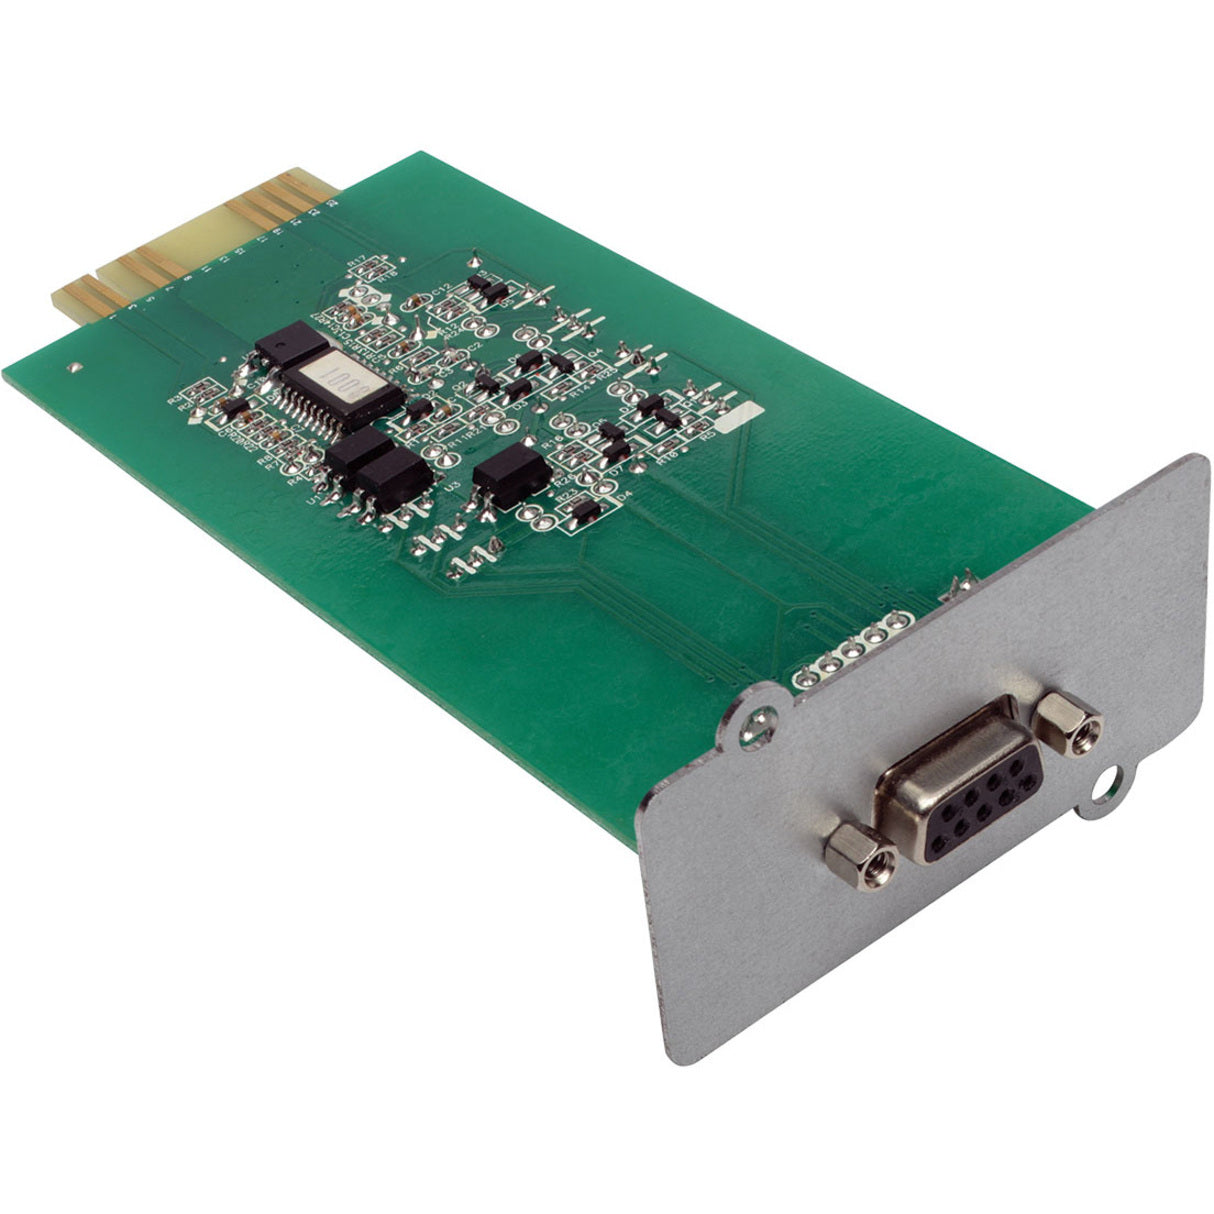 Tripp Lite RELAYCARDSV Programmable Relay I/O Card for Tripp Lite SVTX, SVX and SV UPS Systems